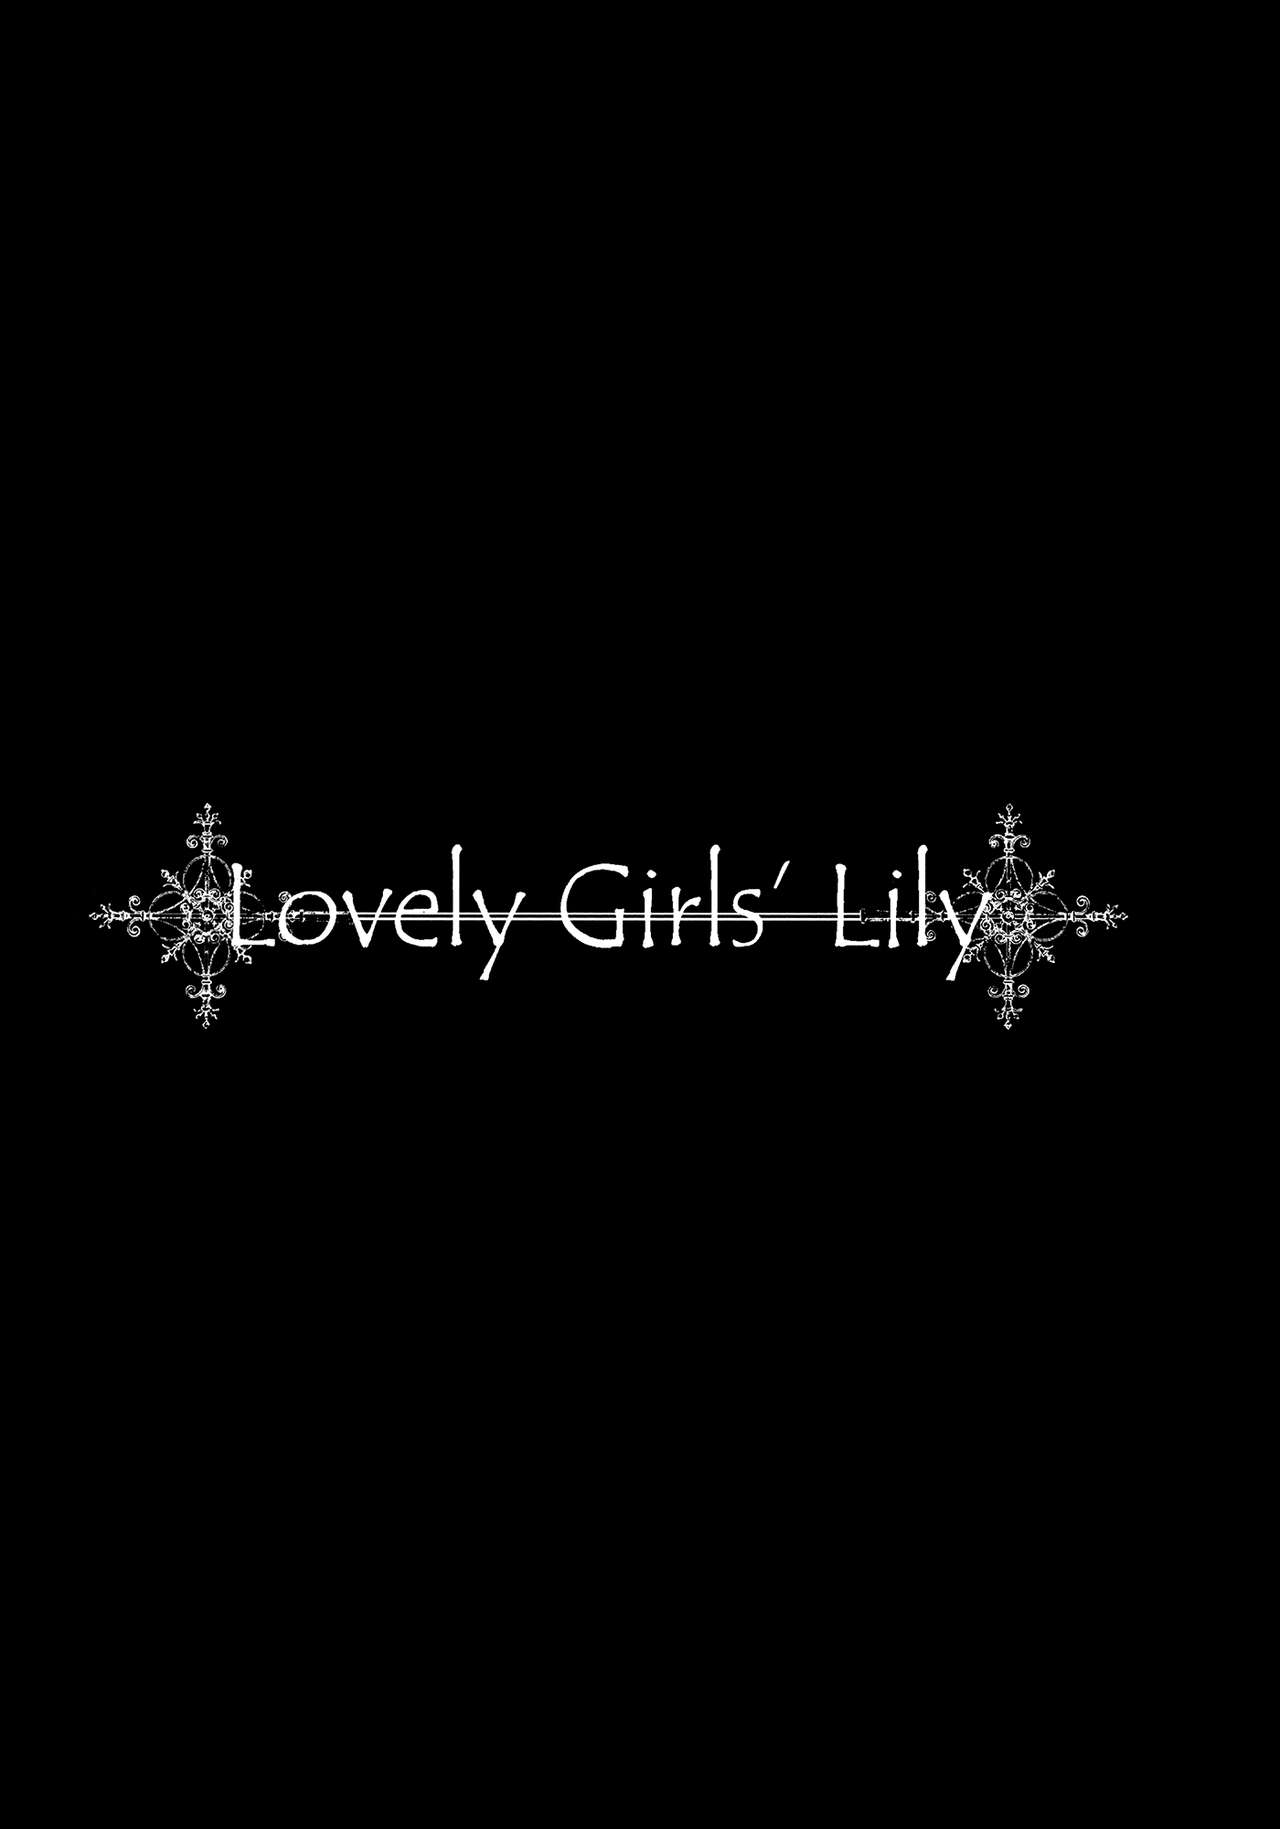 (C80) [Fukazume Kizoku (Amaro Tamaro)] Lovely Girls' Lily vol.1 (Puella Magi Madoka Magica) [English] (C80) [深爪貴族 (あまろたまろ)] Lovely Girls' Lily vol.1 (魔法少女まどか☆マギカ)  [英訳]